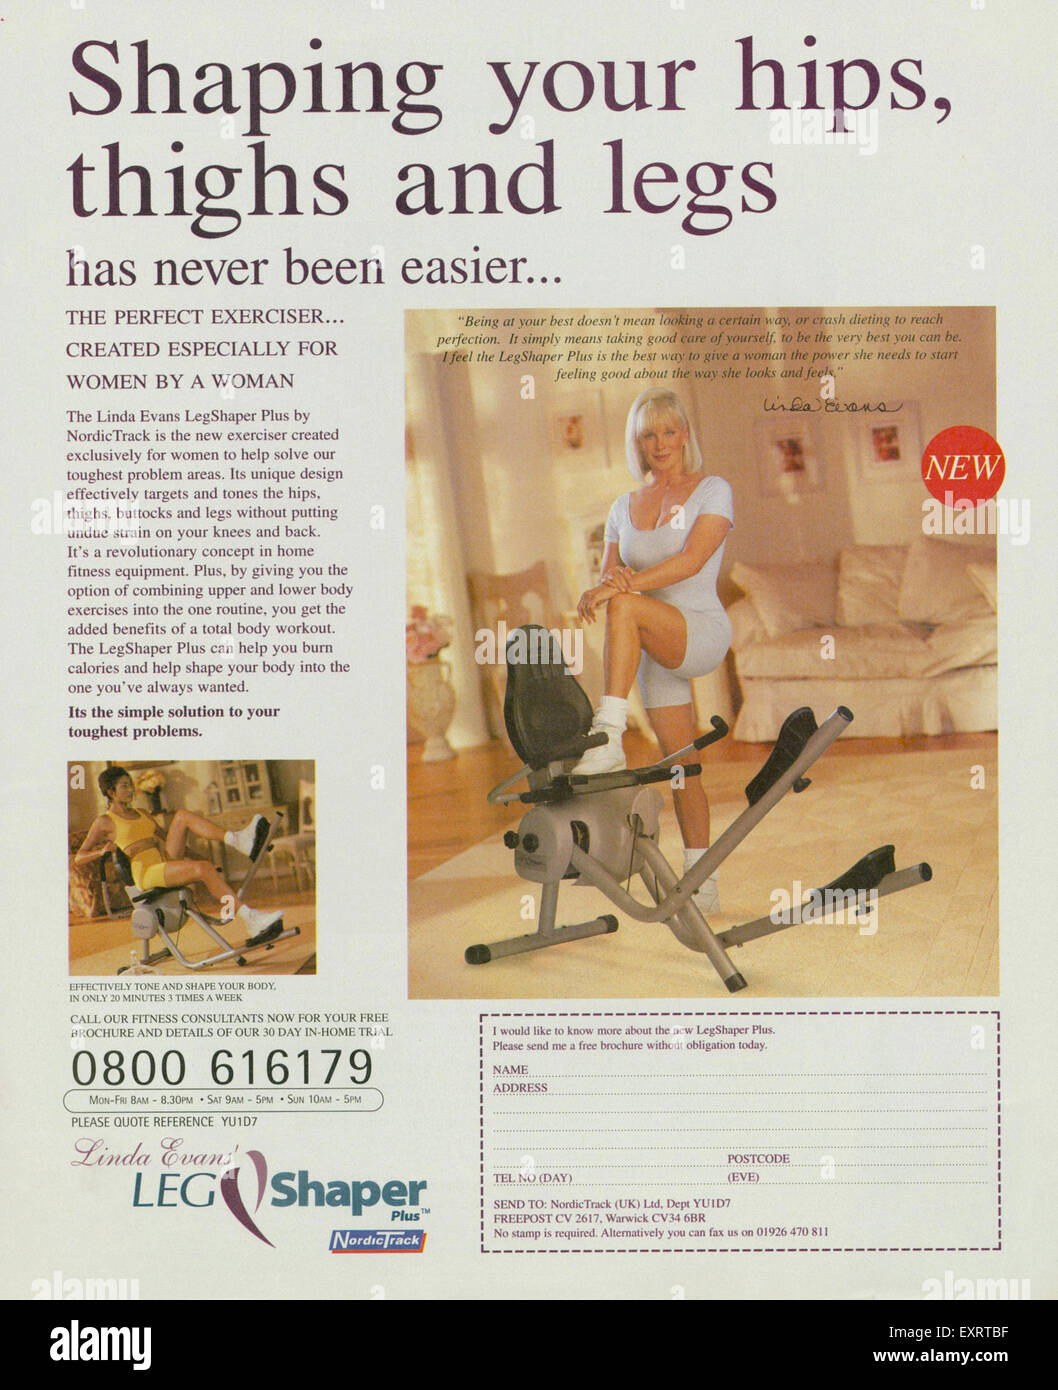 https://c8.alamy.com/comp/EXRTBF/1990s-uk-linda-evans-leg-shaper-magazine-advert-EXRTBF.jpg